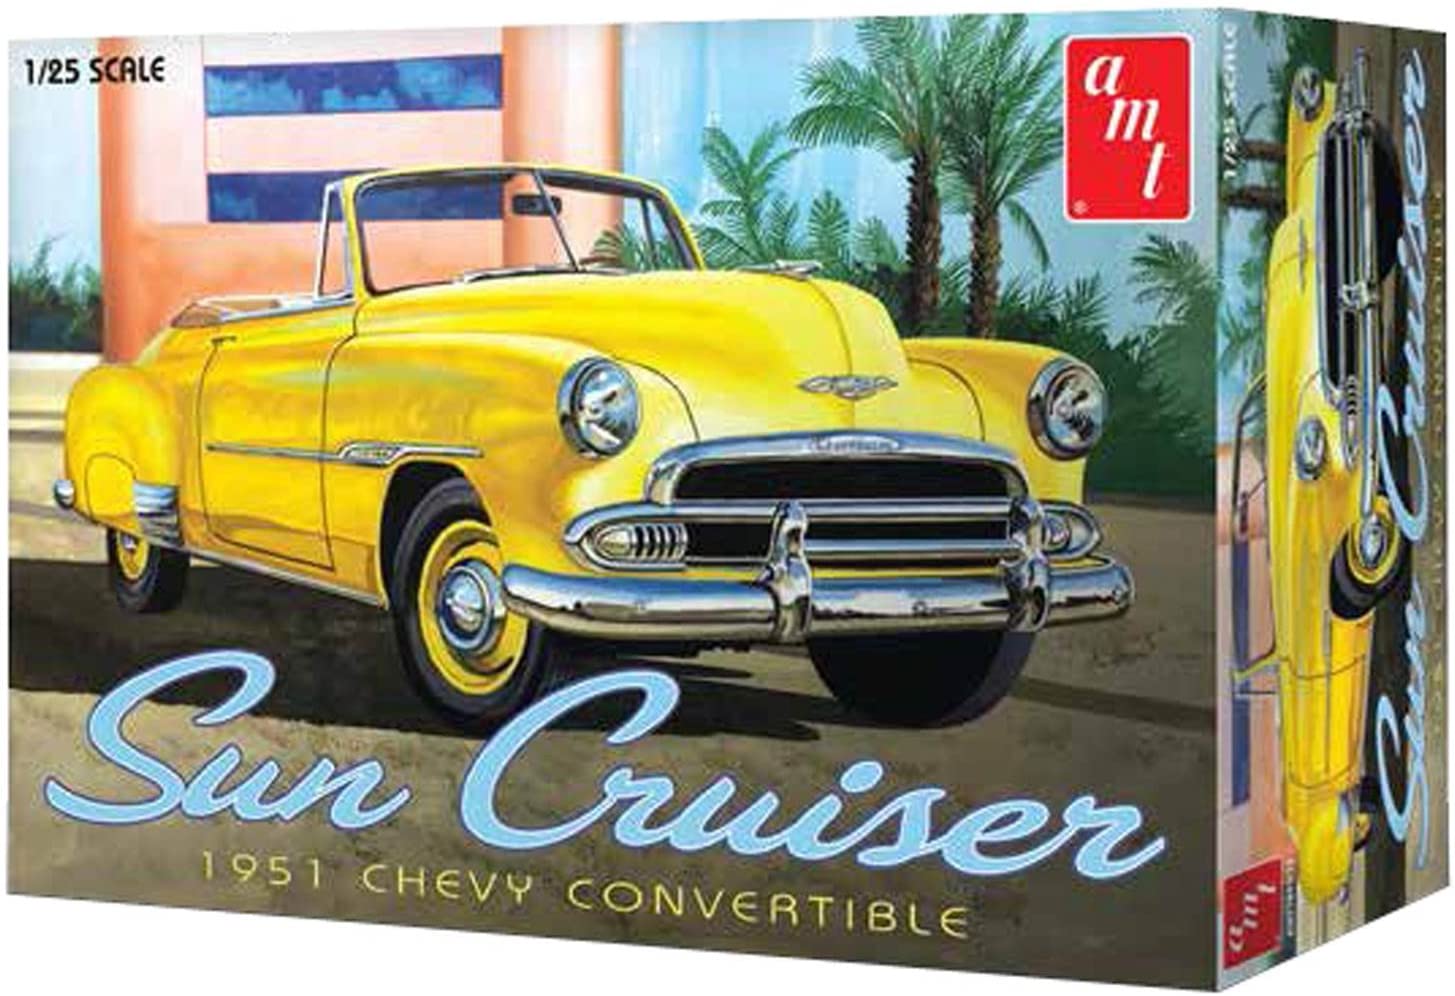 1/25 1951 Chevy Convertible Sun Cruiser Plastic Model Kit